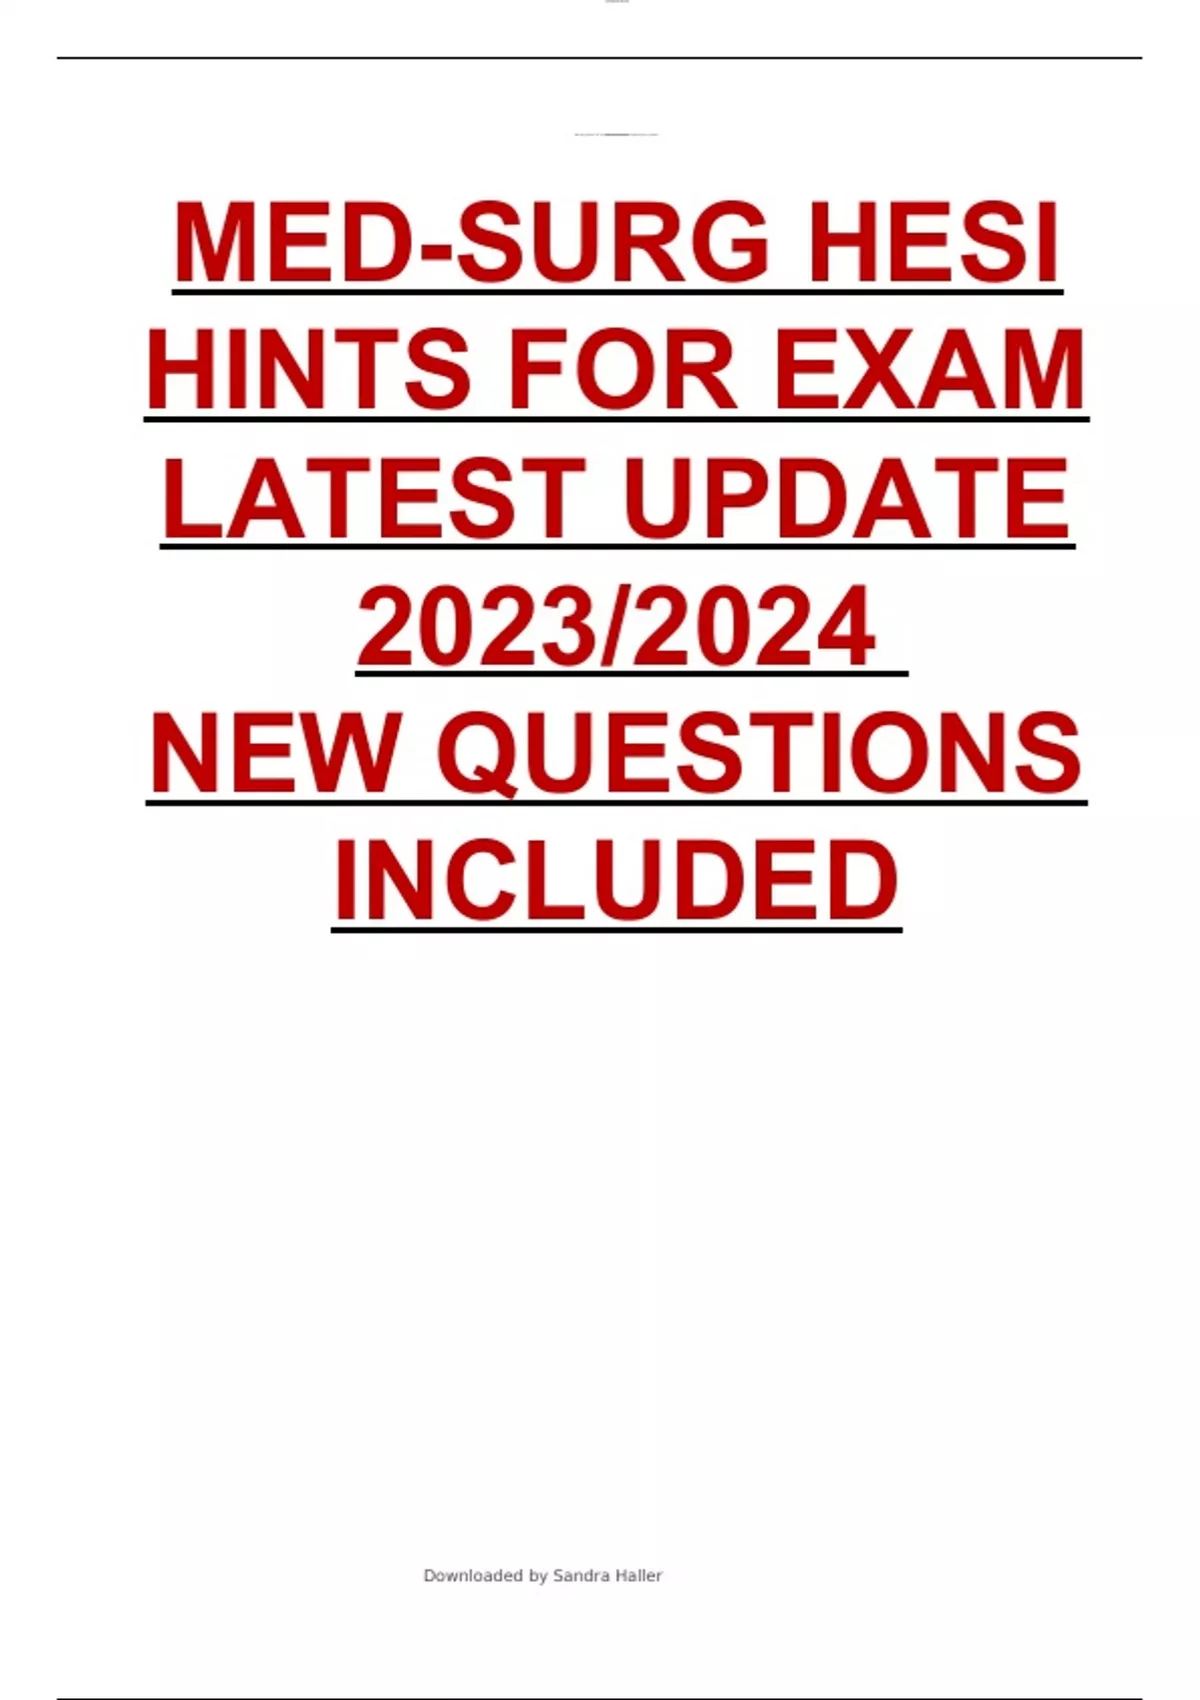 MEDSurg HESI hints for exam Latest Update 2023/2024 (New Questions